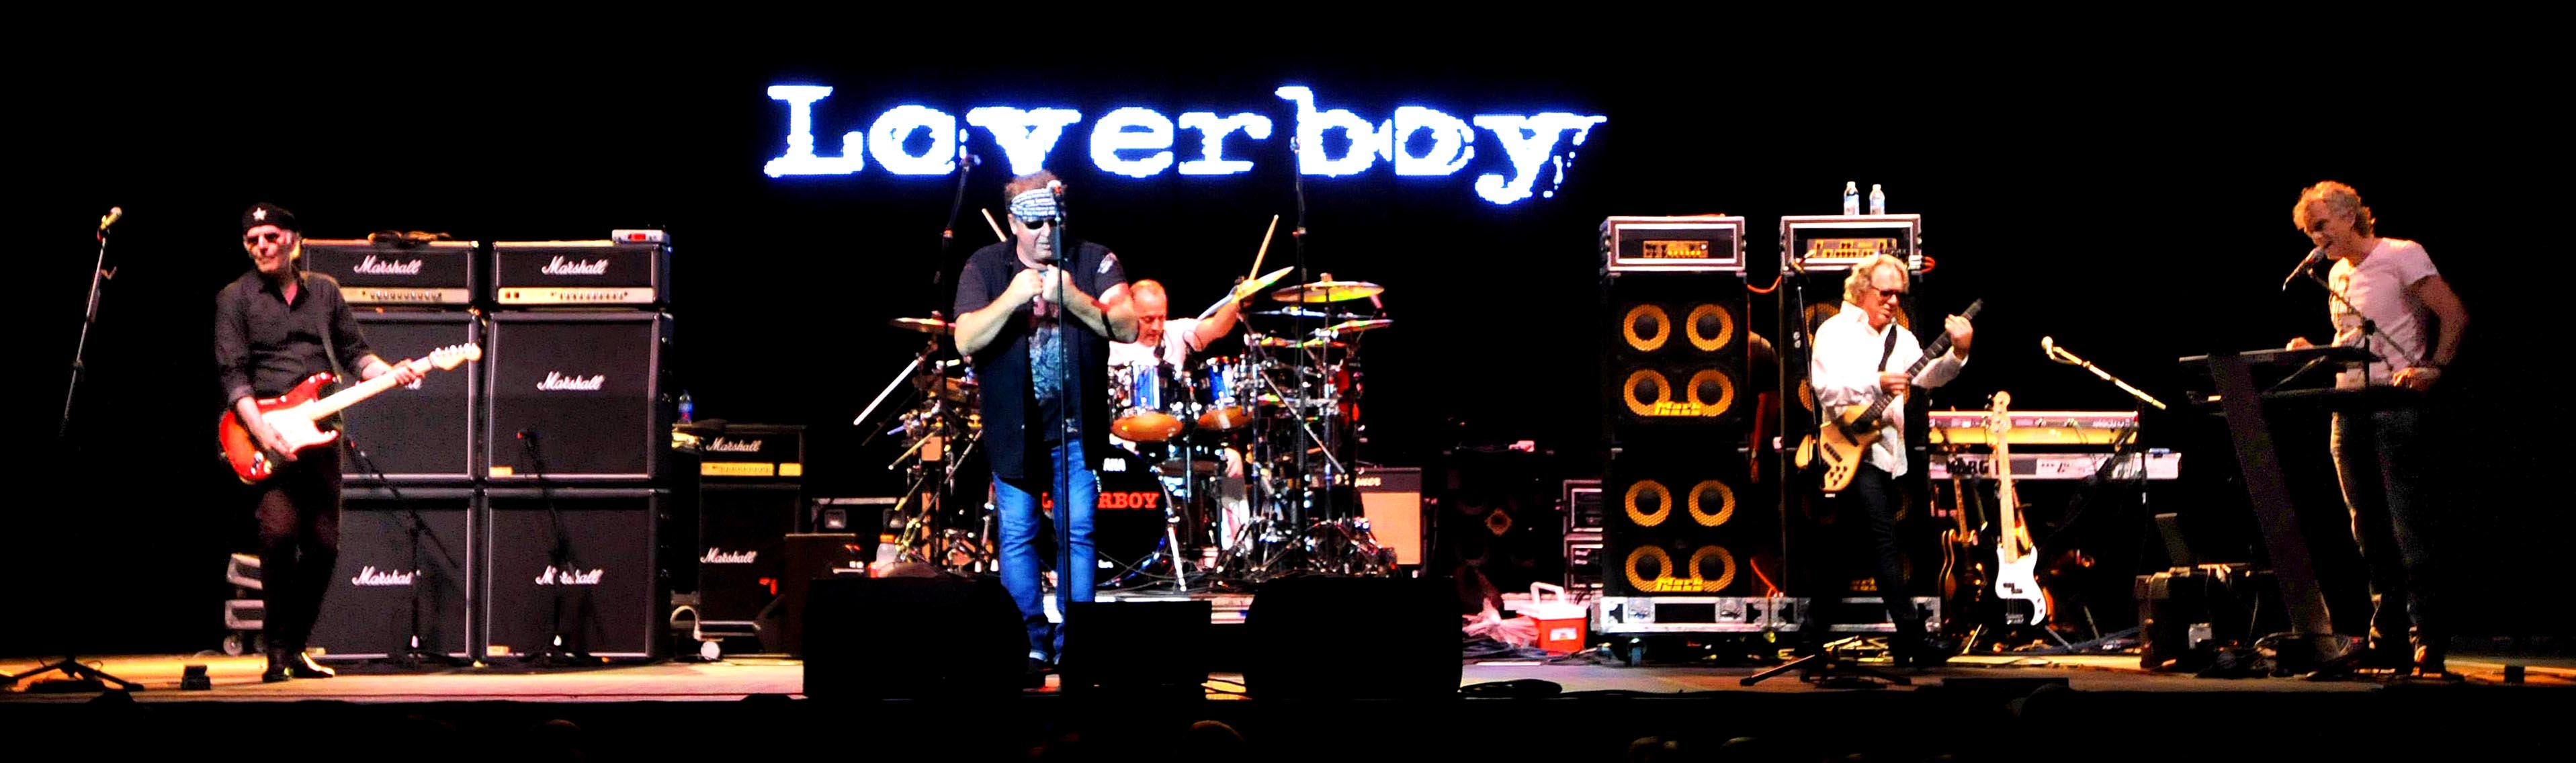 loverboy tour 1985